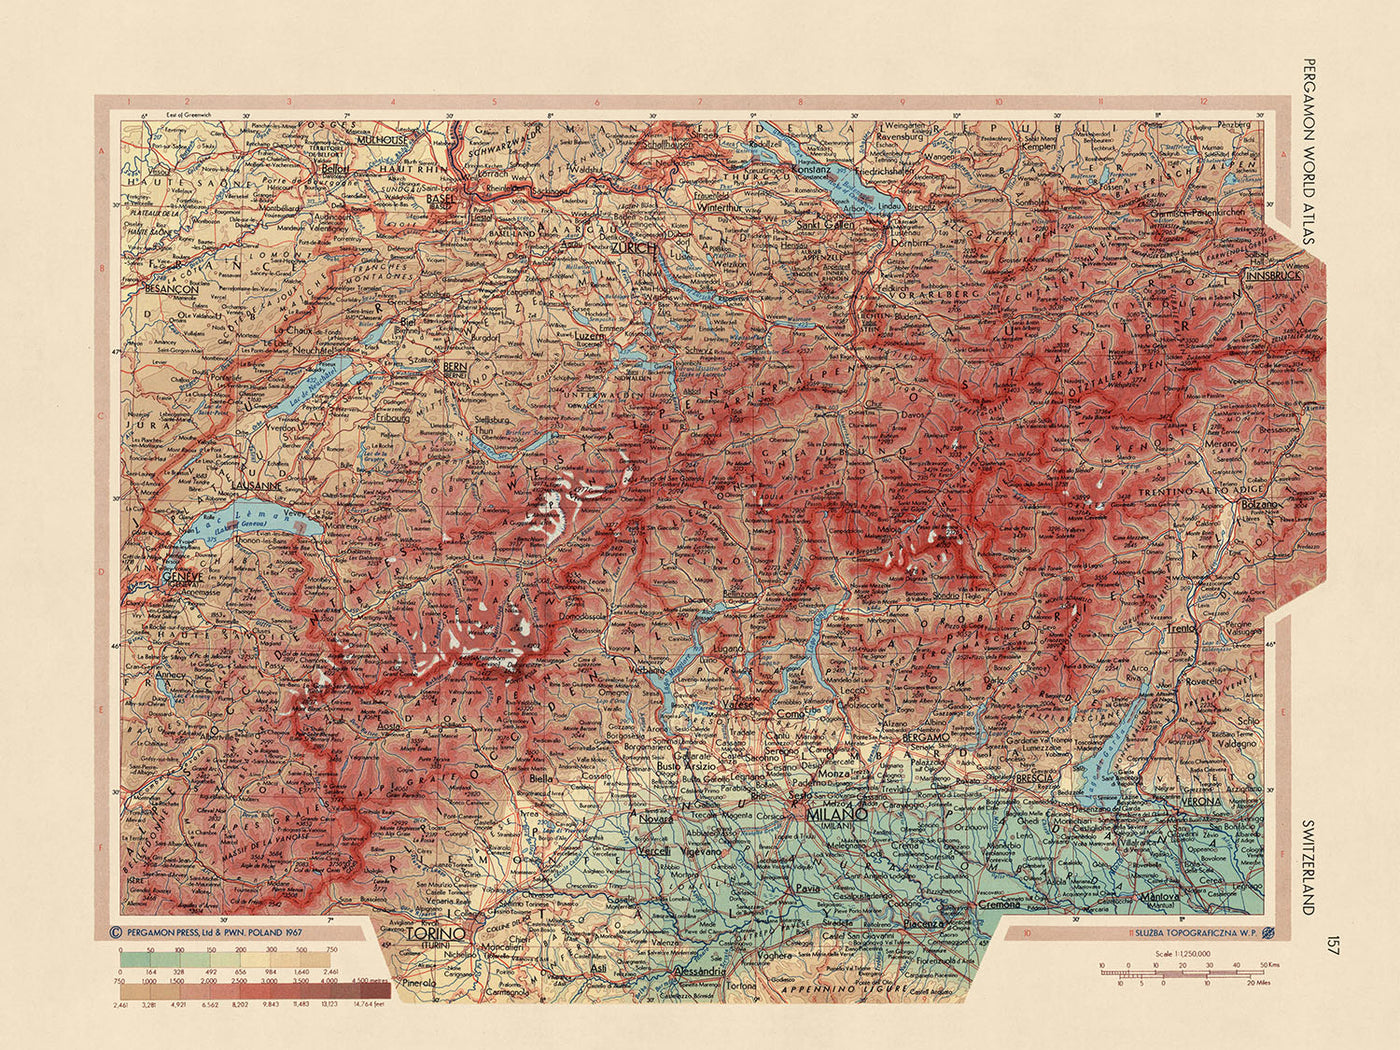 Old Map of Switzerland, 1967: The Alps, Bern, Geneva, Zurich, Lake Geneva